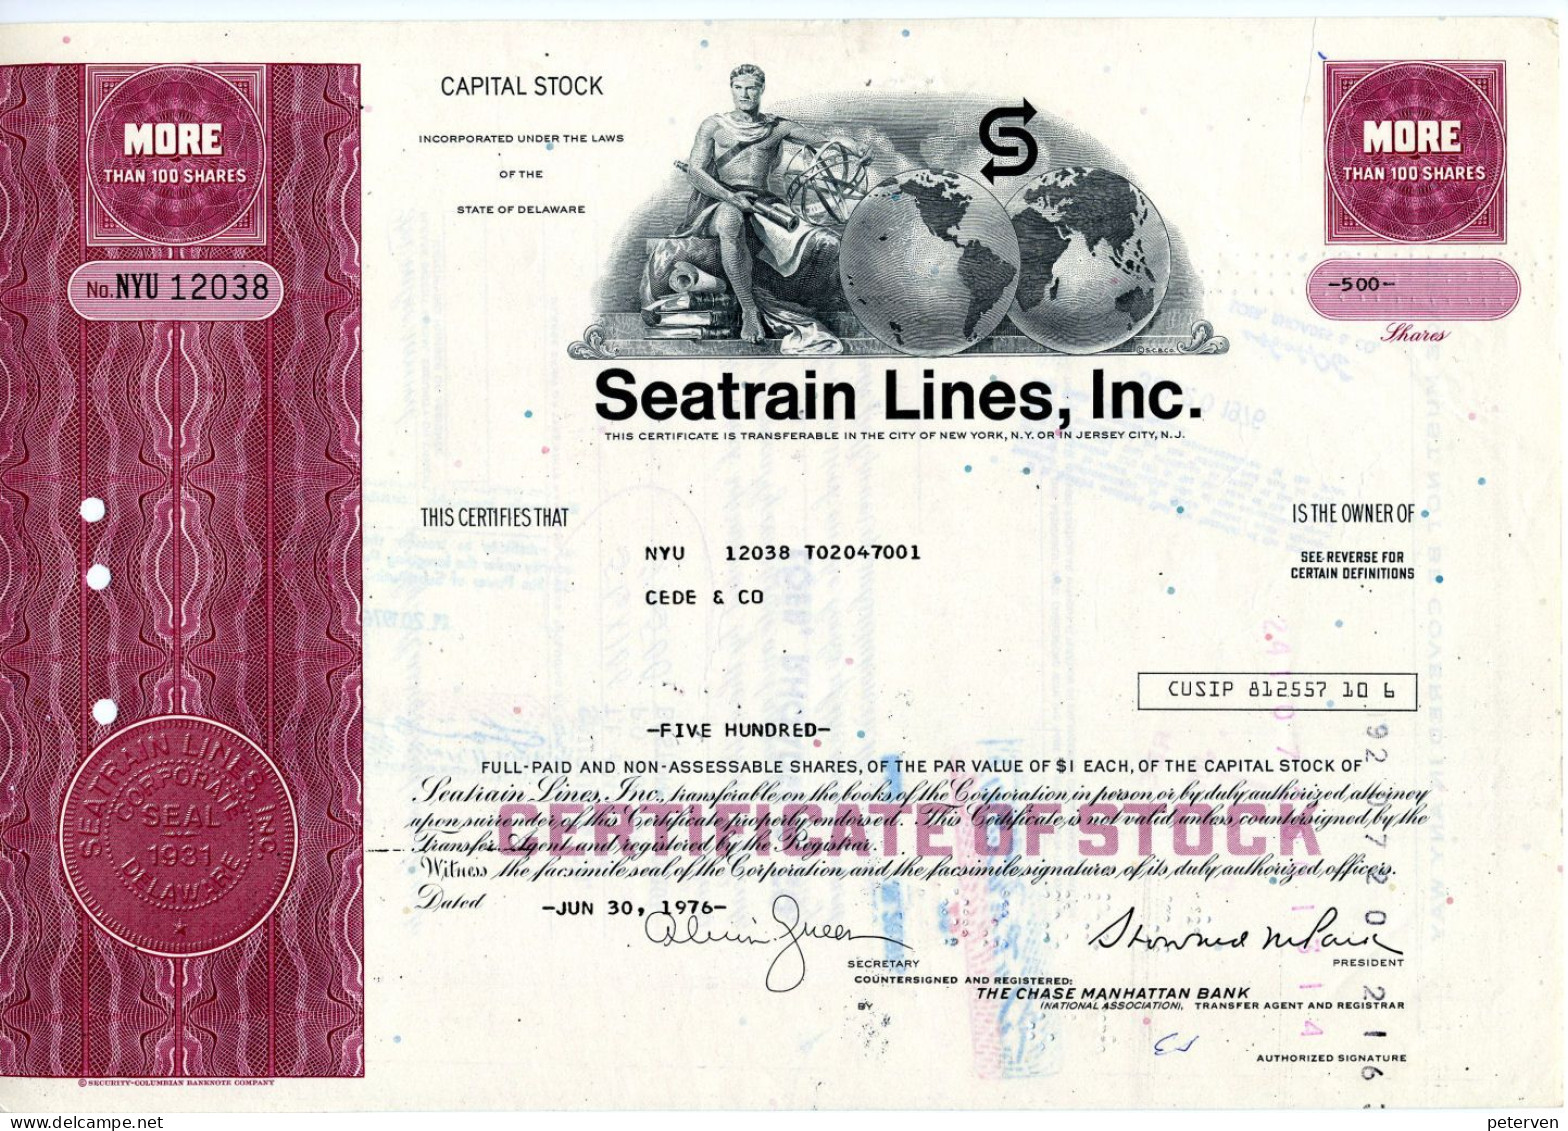 SEATRAIN LINES, Incorporated - Transport